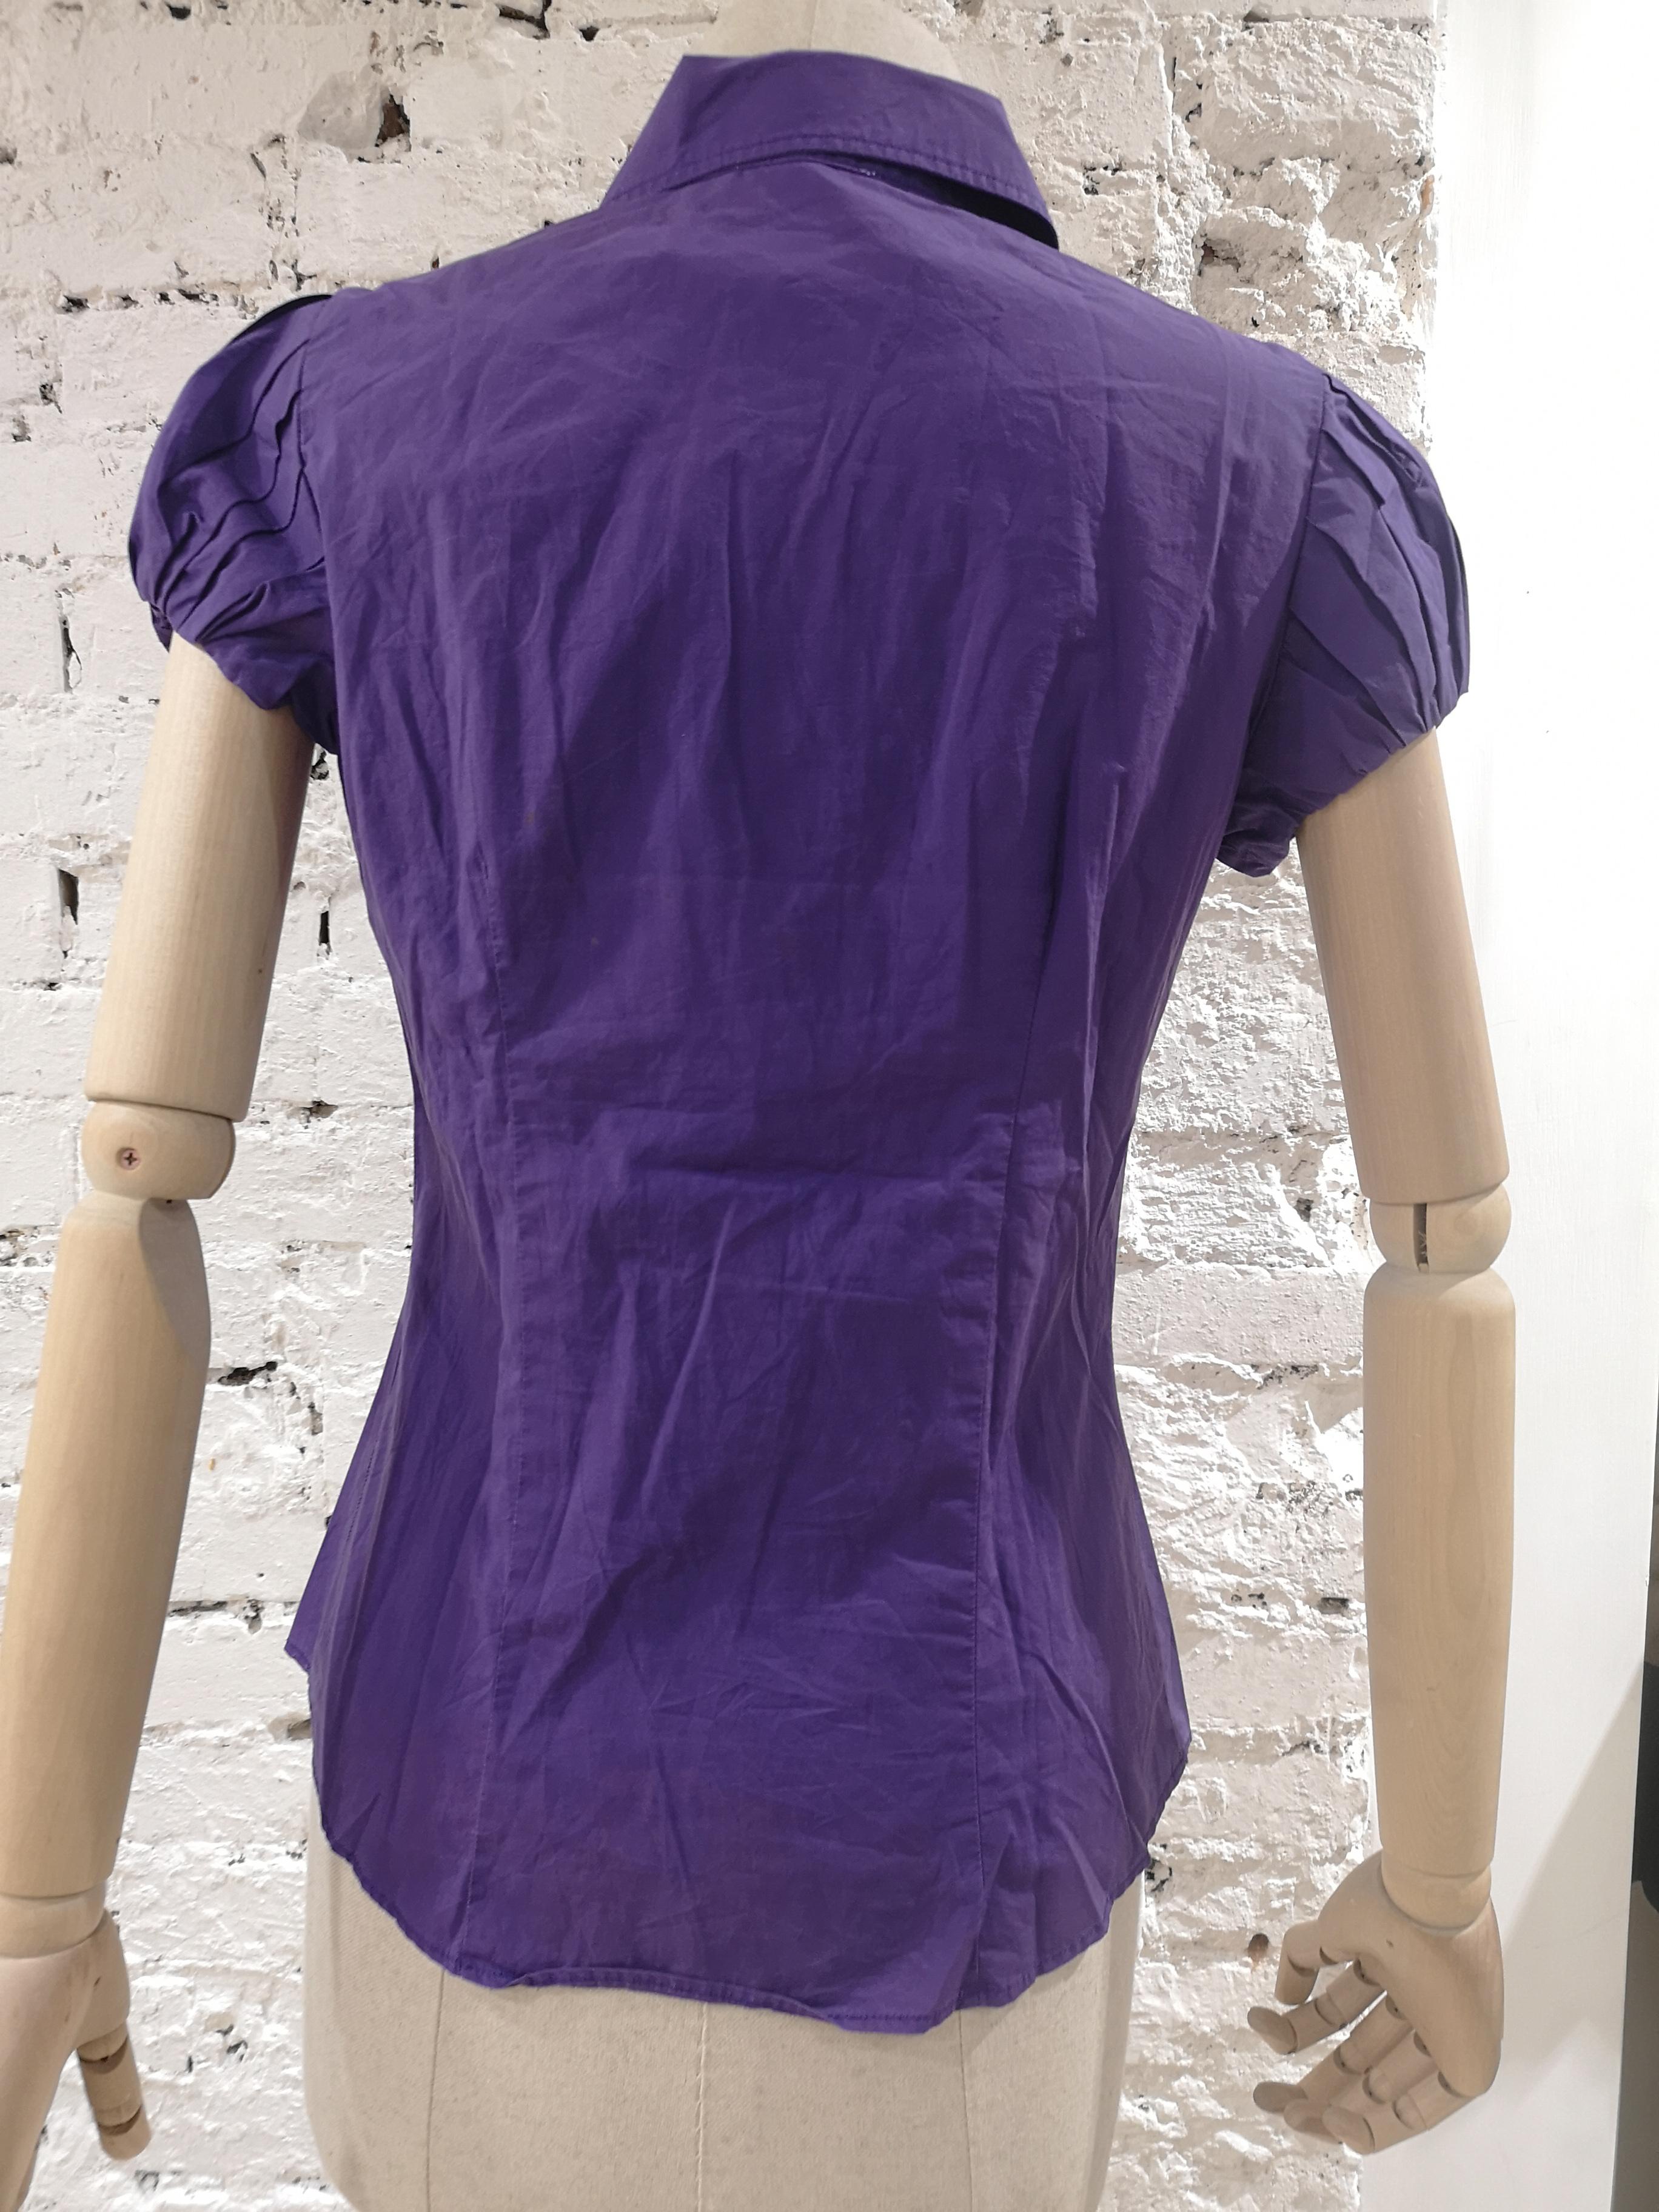 Women's Moschino purple cotton shirt